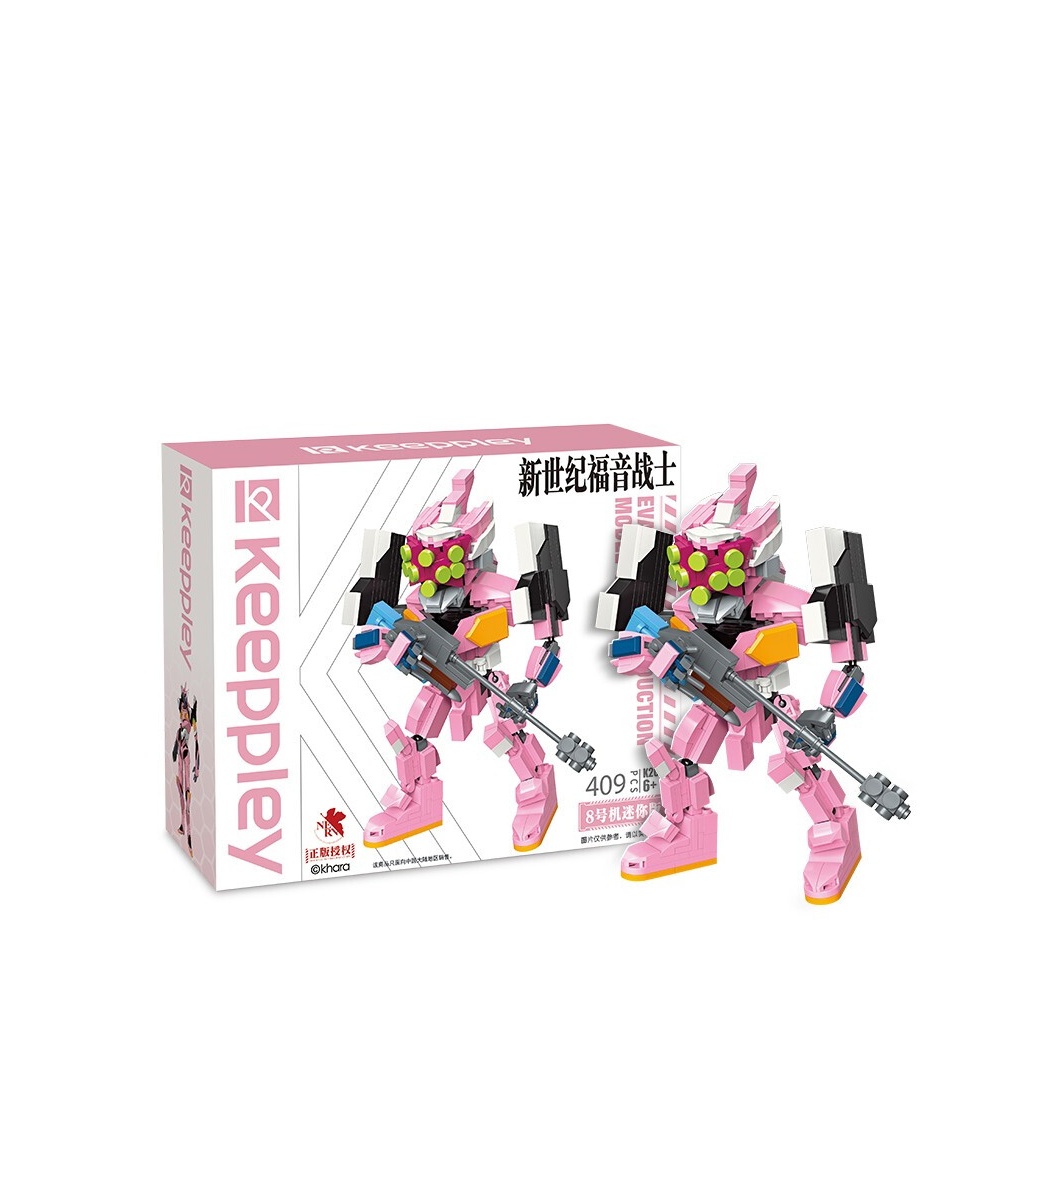 Keeppley K20303 Neon Genesis Evangelion Unit 08 Mini Building Blocks Toy Set